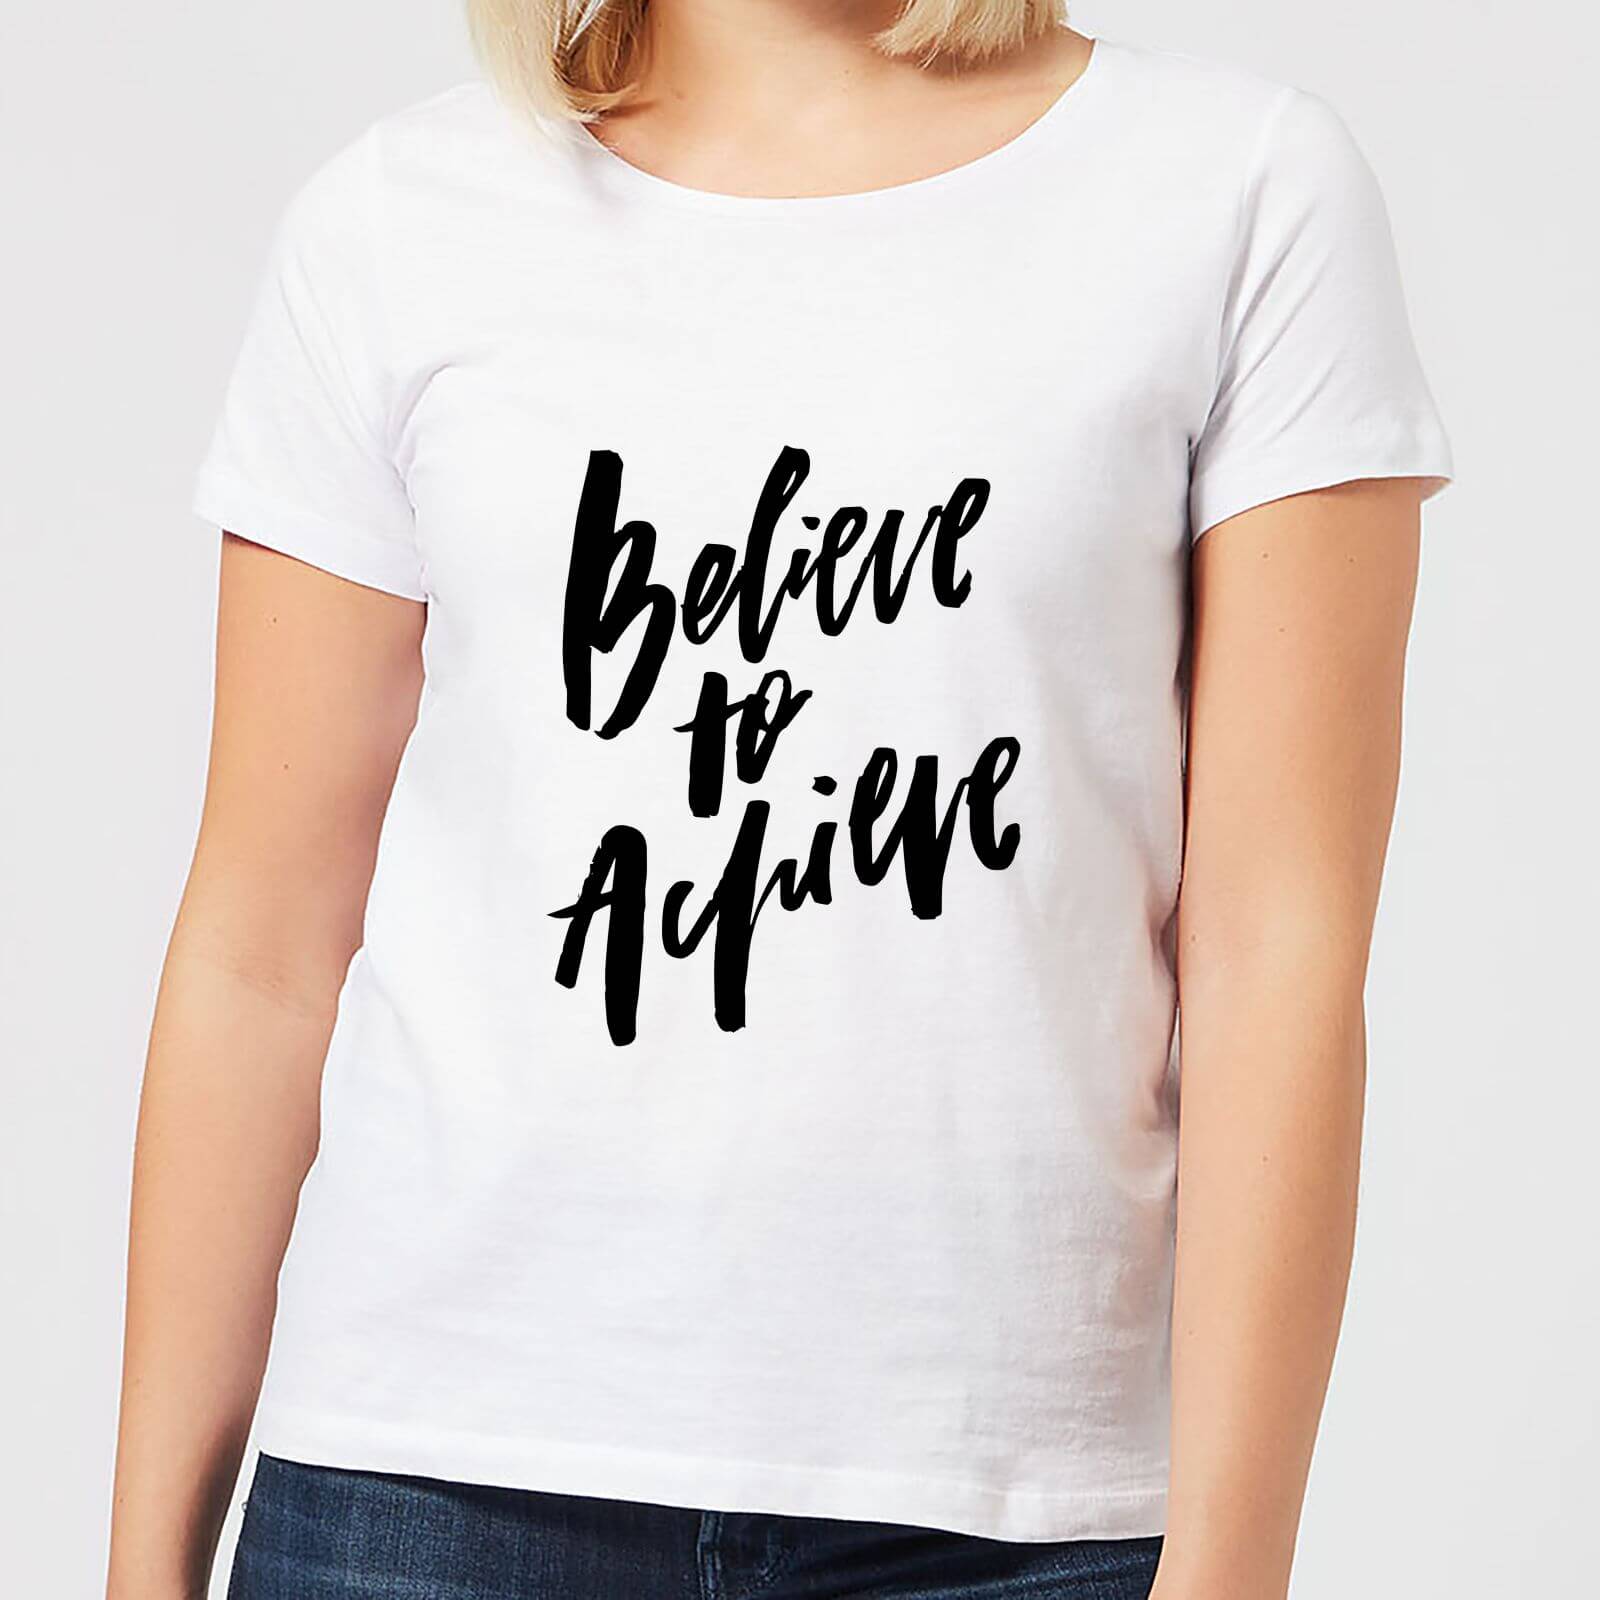 Believe To Achieve Women's T-Shirt - White - S - White